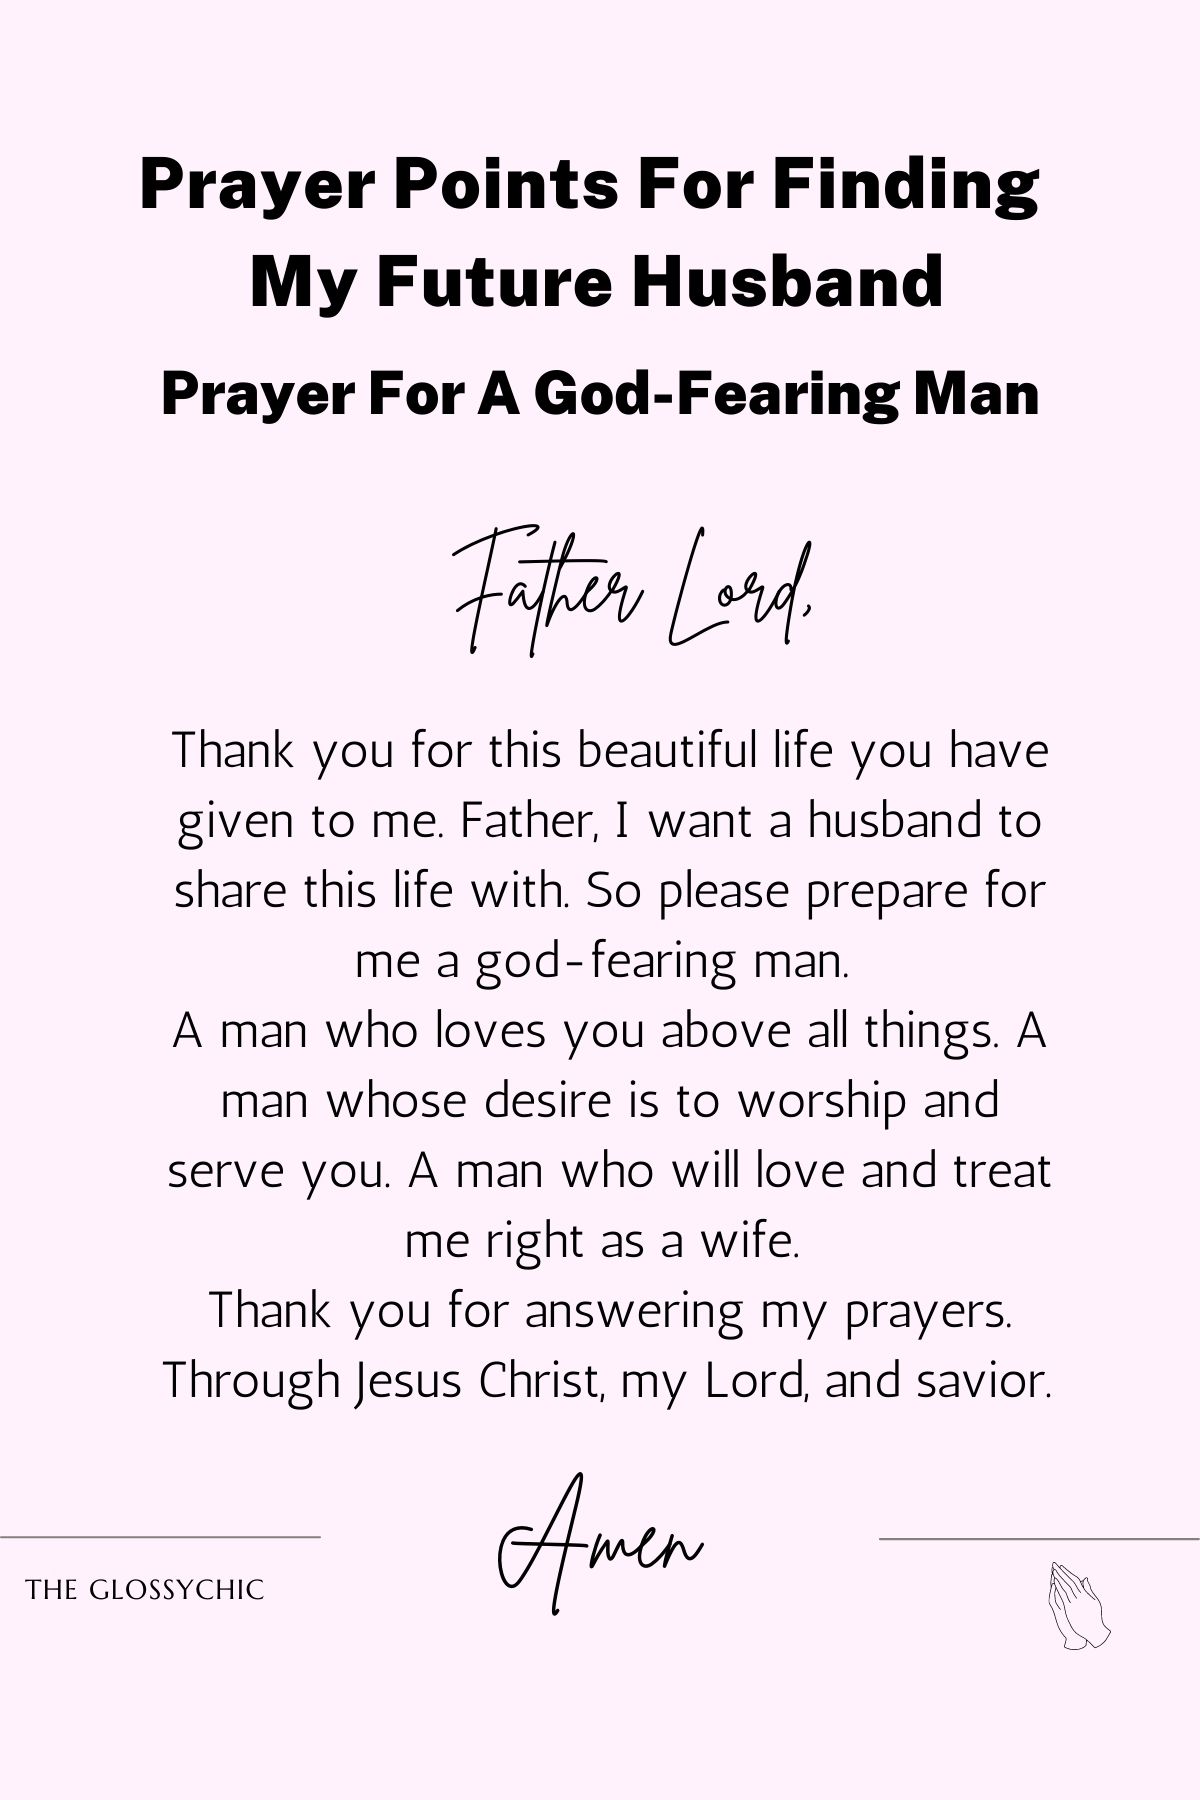 Prayer For A God-Fearing Man